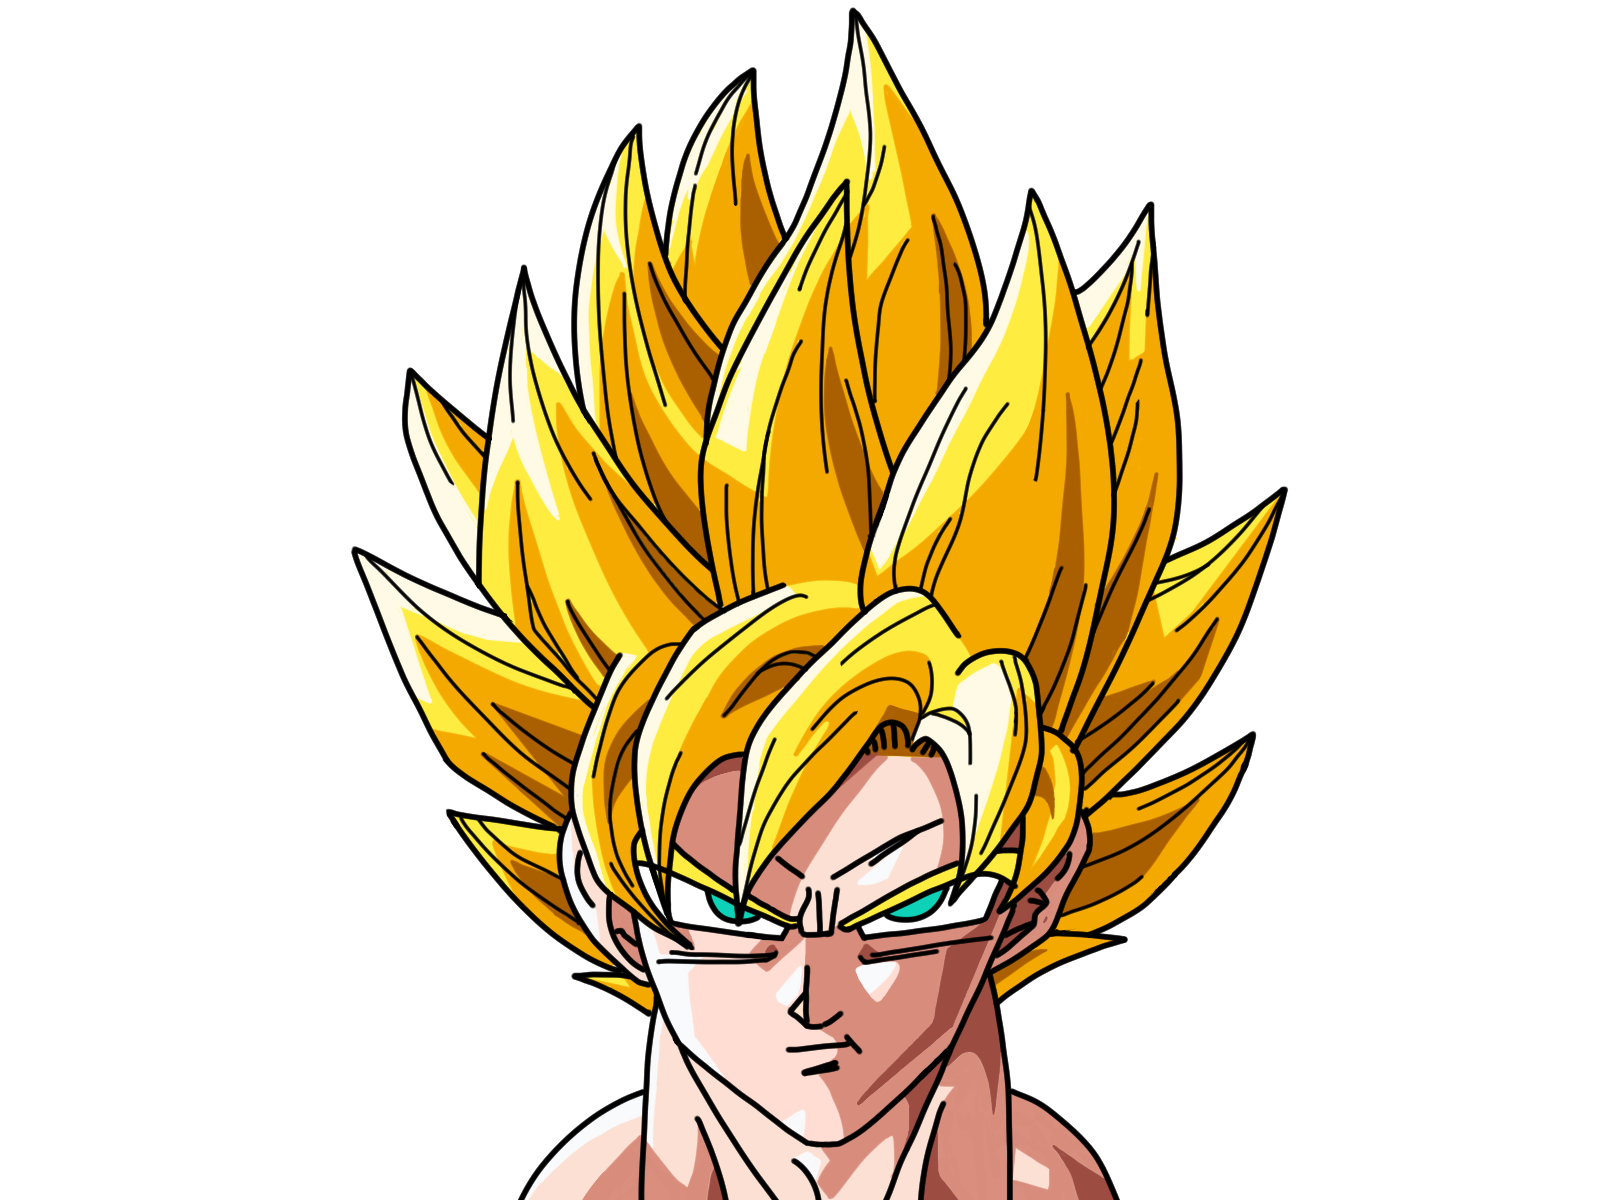 Super Saiyan Goku - Dragon Ball by PastelAcademia on DeviantArt